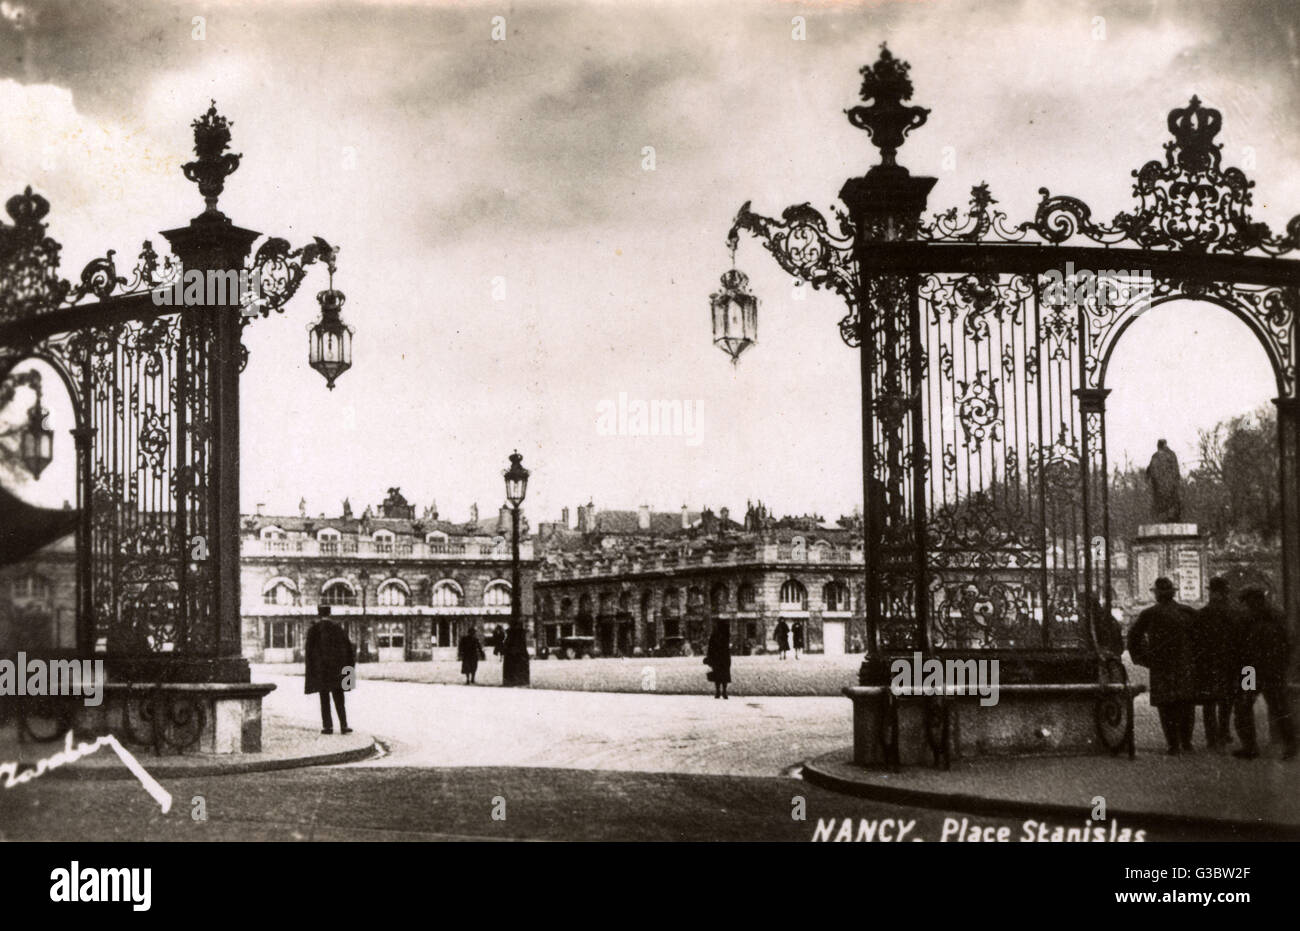 Nancy, France - Place Stanislas     Date: circa 1920s Stock Photo